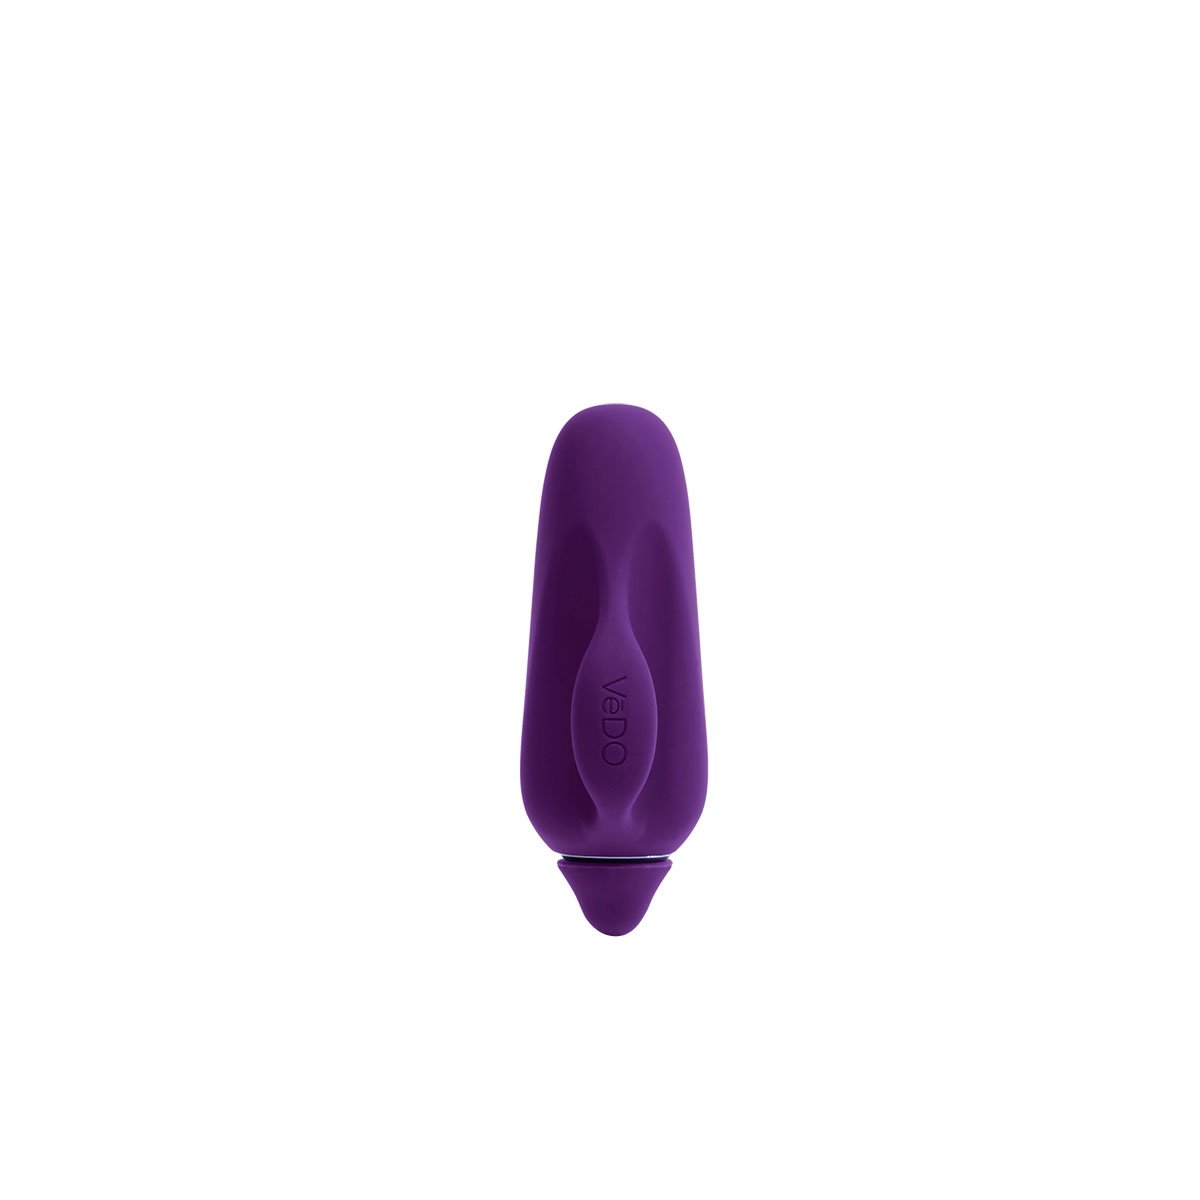 VeDO Vivi Finger Vibe - Buy At Luxury Toy X - Free 3-Day Shipping